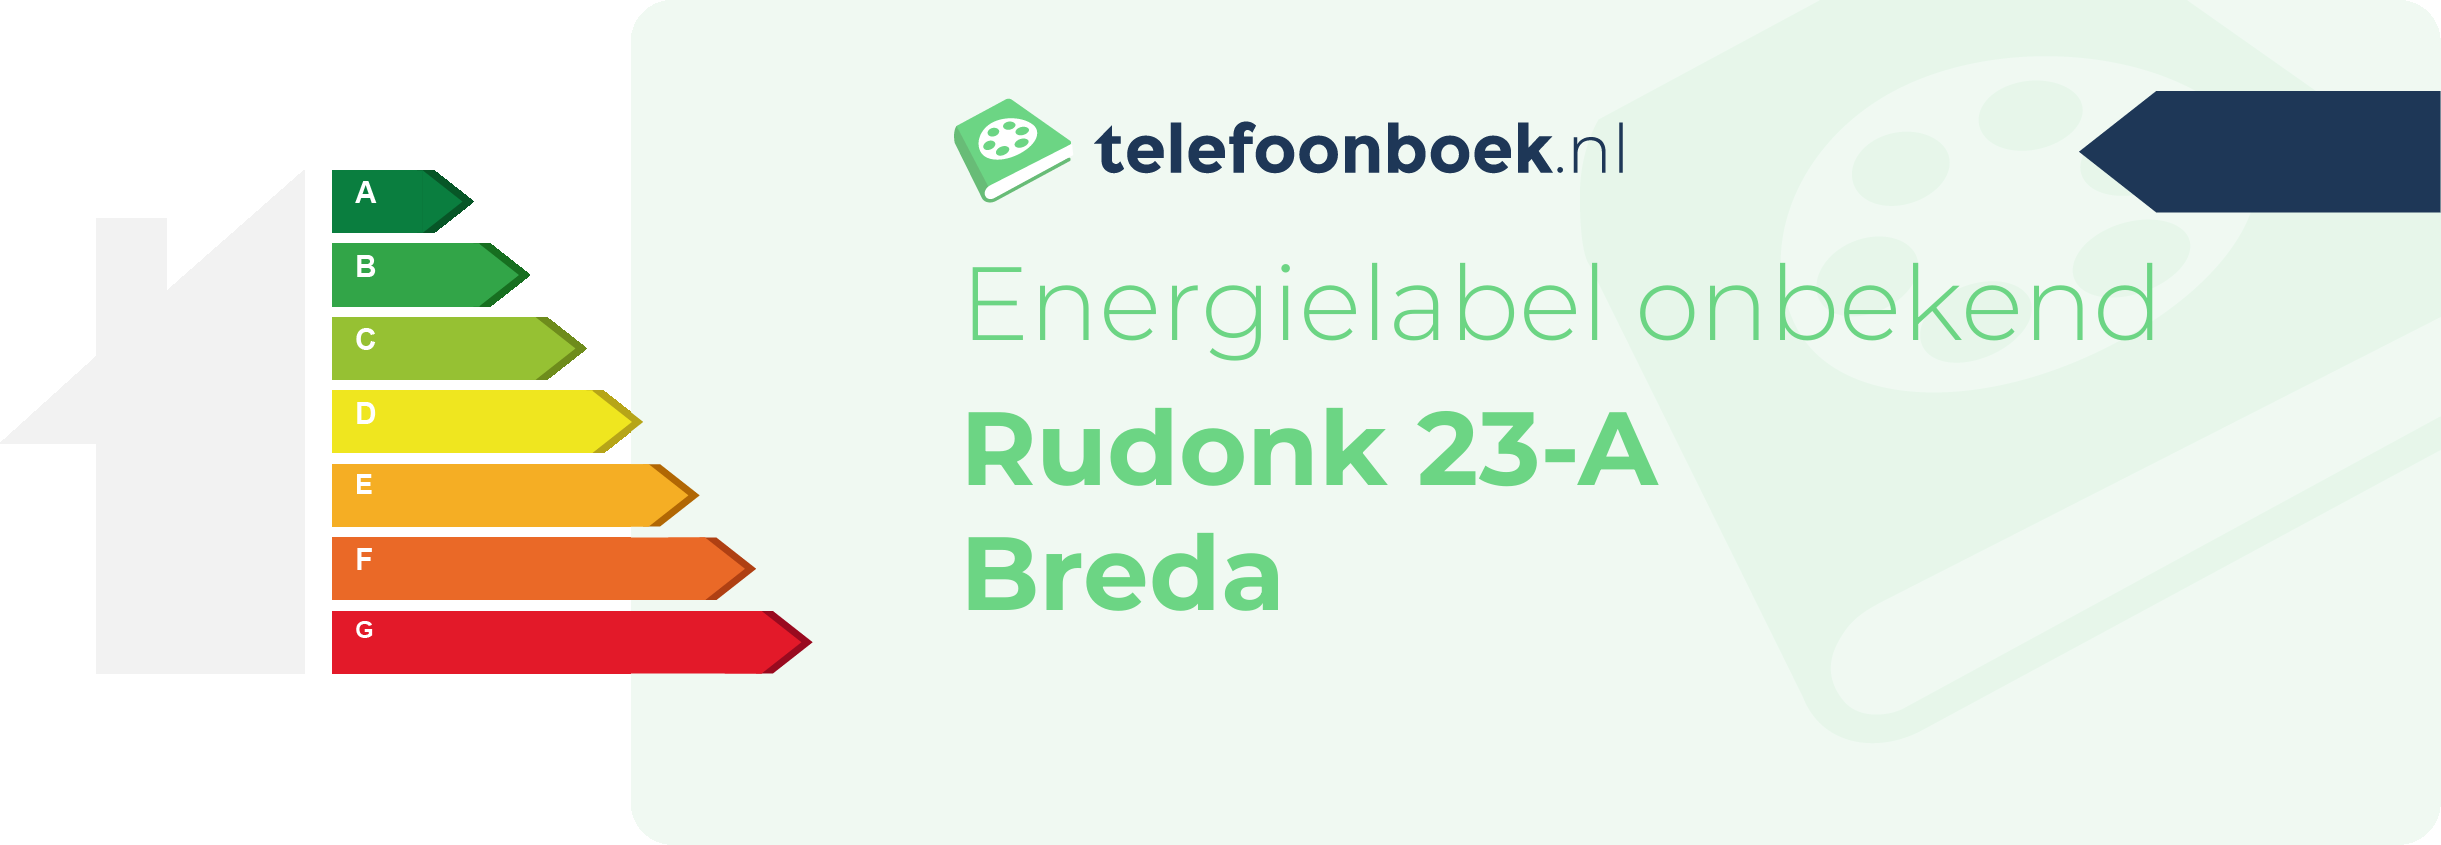 Energielabel Rudonk 23-A Breda